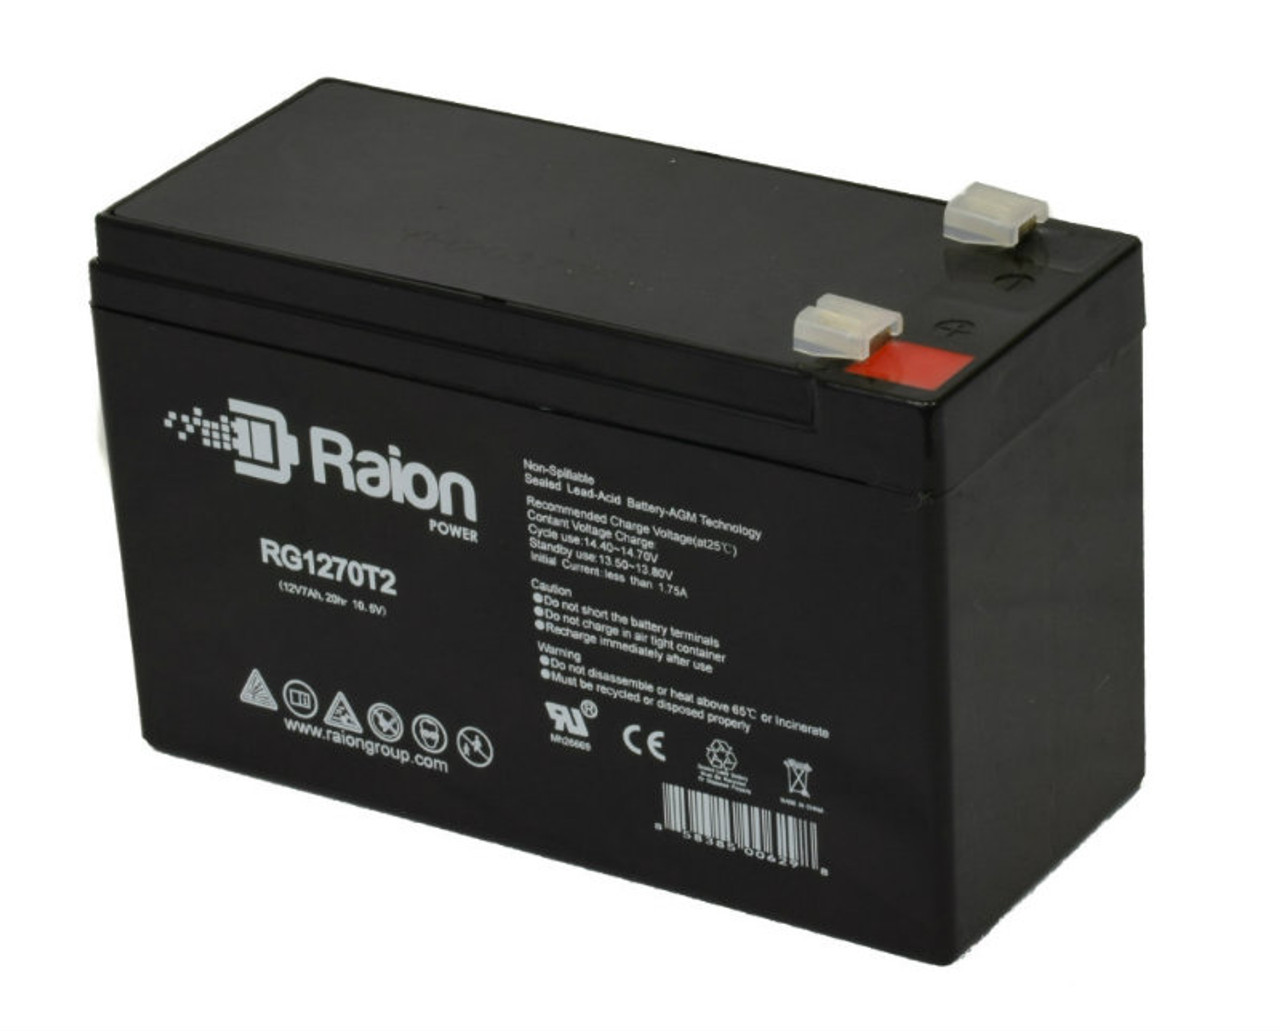 Raion Power RG1270T2 12V 7Ah Lead Acid Battery for Pulse Performance Products Sonic XL